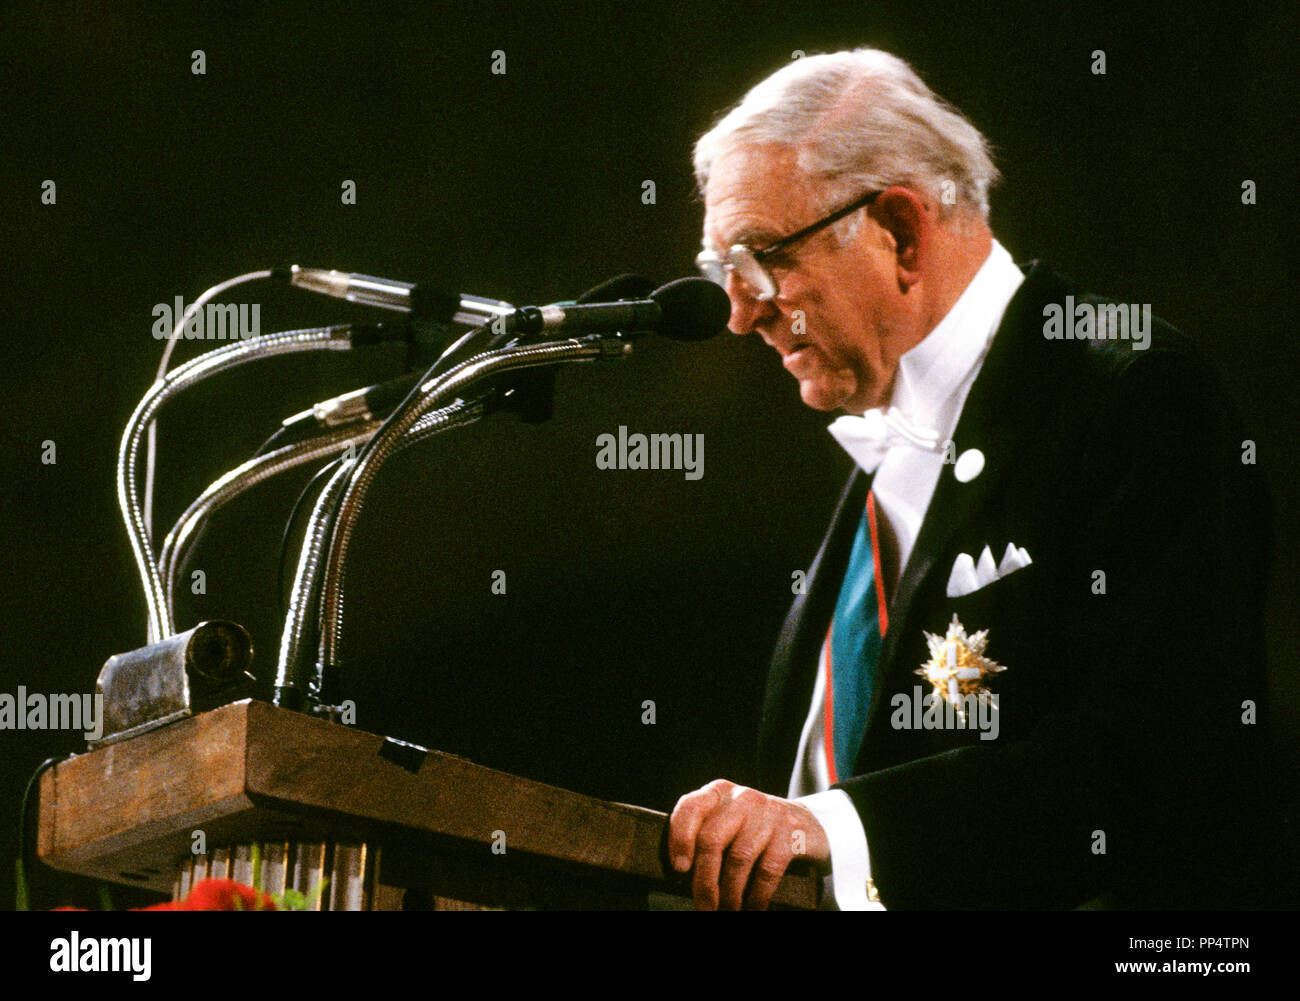 FRANCO MODIGLIANI Italian-American economist recipient of Nobel Prize in economics 1985 Stock Photo